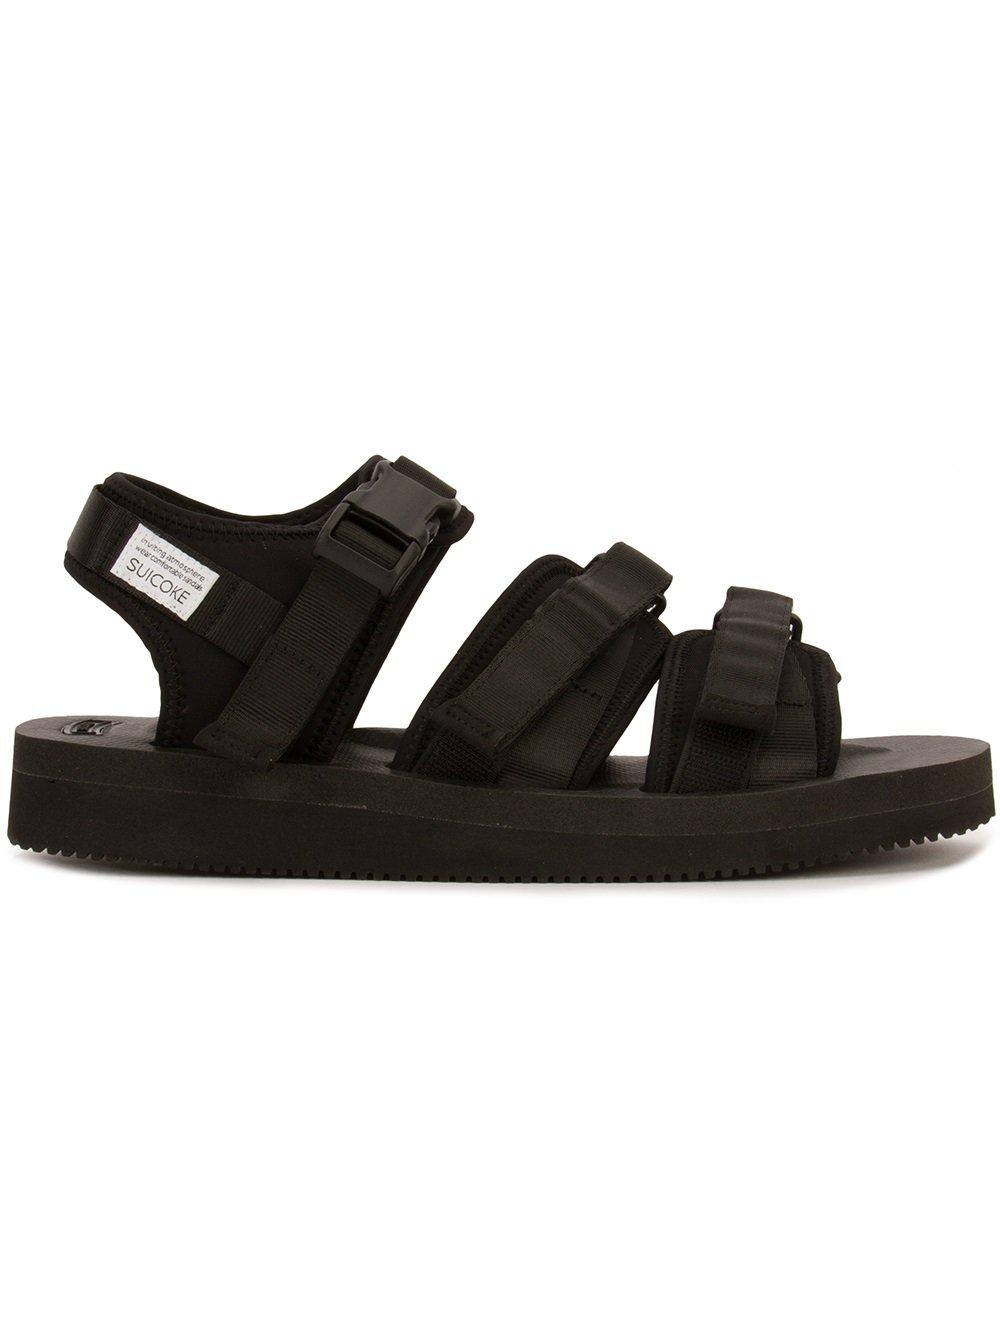 Suicoke Velcro Straps Sandals in Black for Men - Lyst